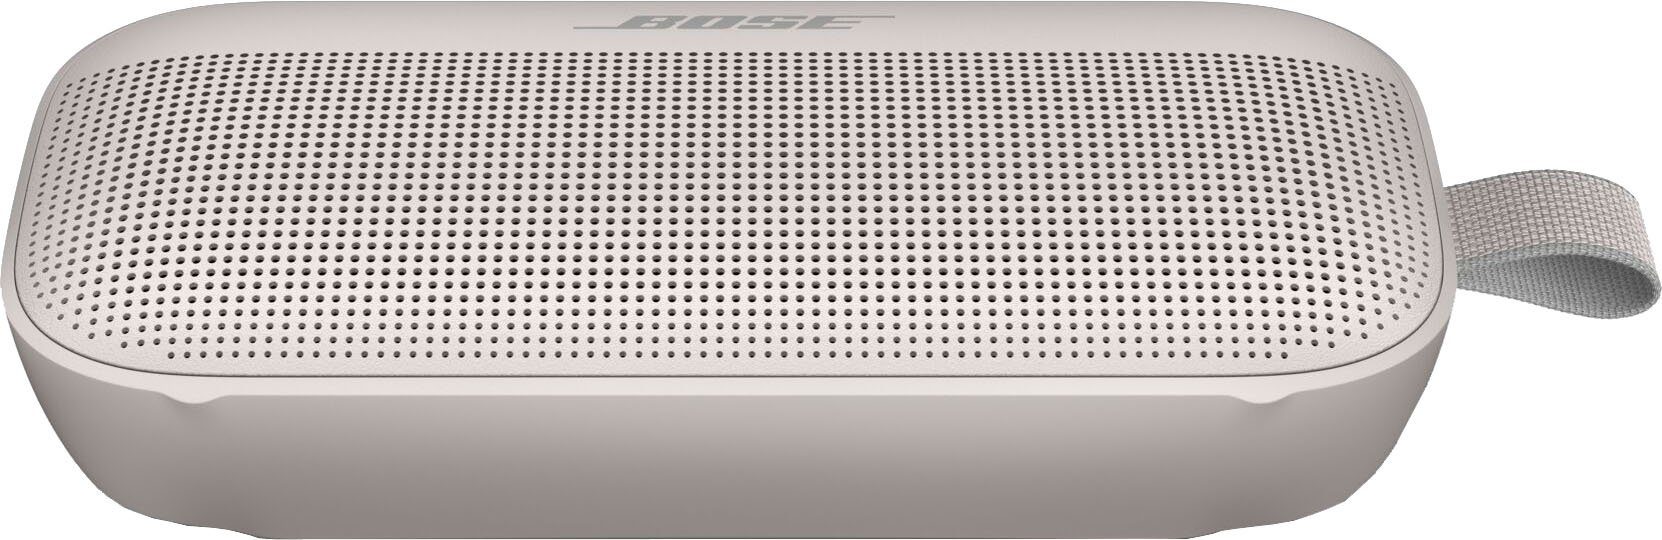 Bose SoundLink weiß Stereo (Bluetooth) Lautsprecher Flex